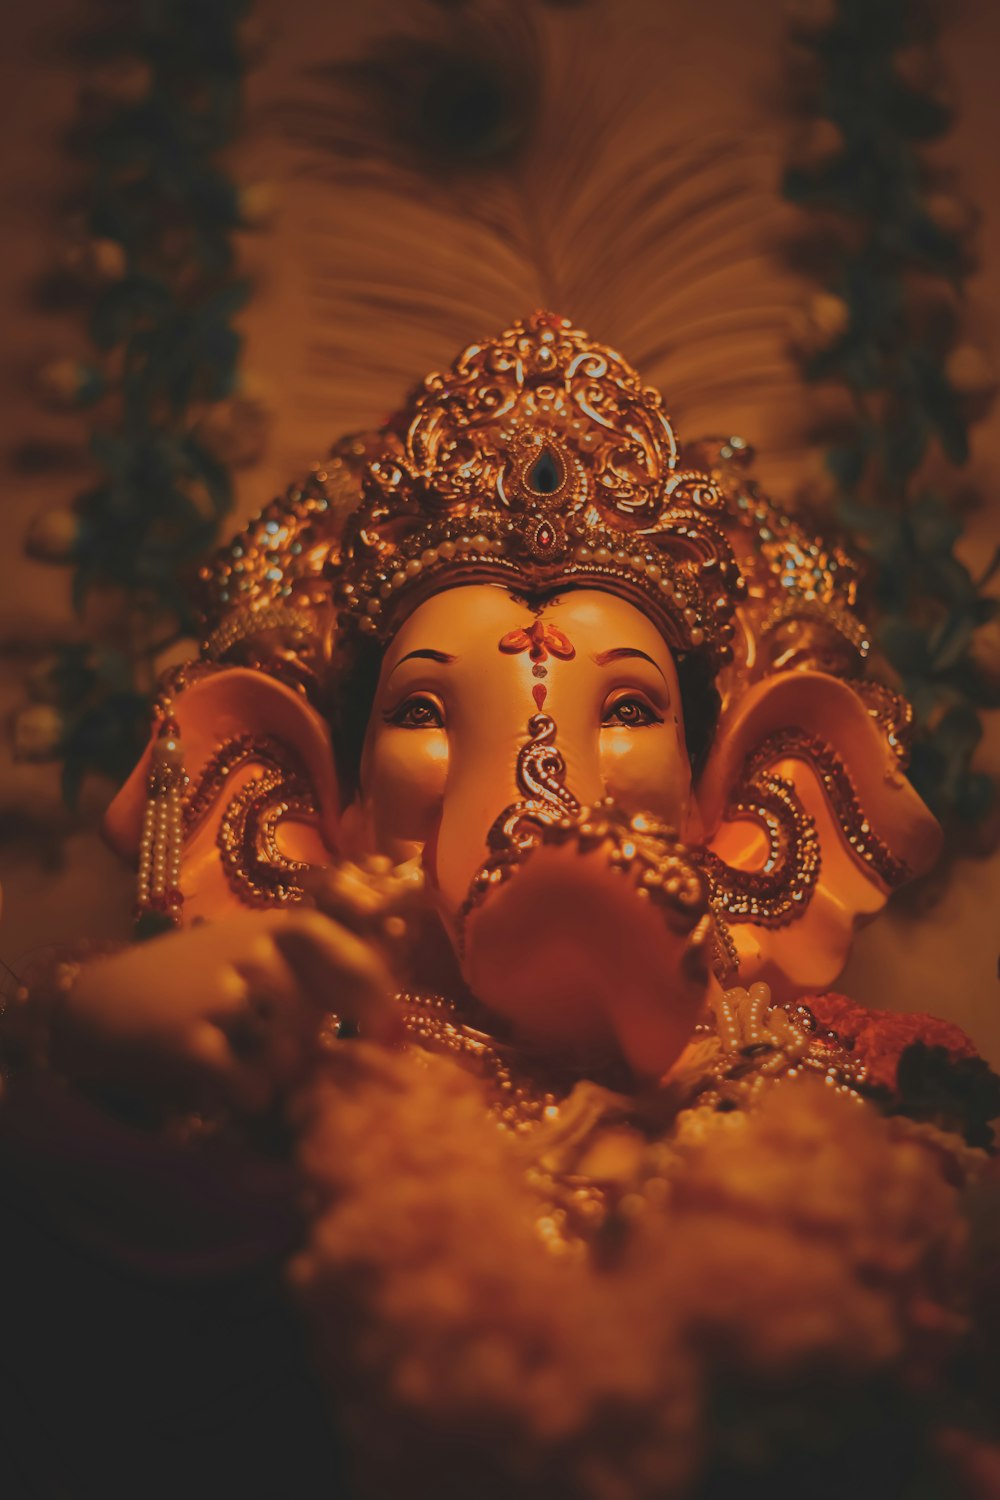 gold hindu deity figurine in close up photography